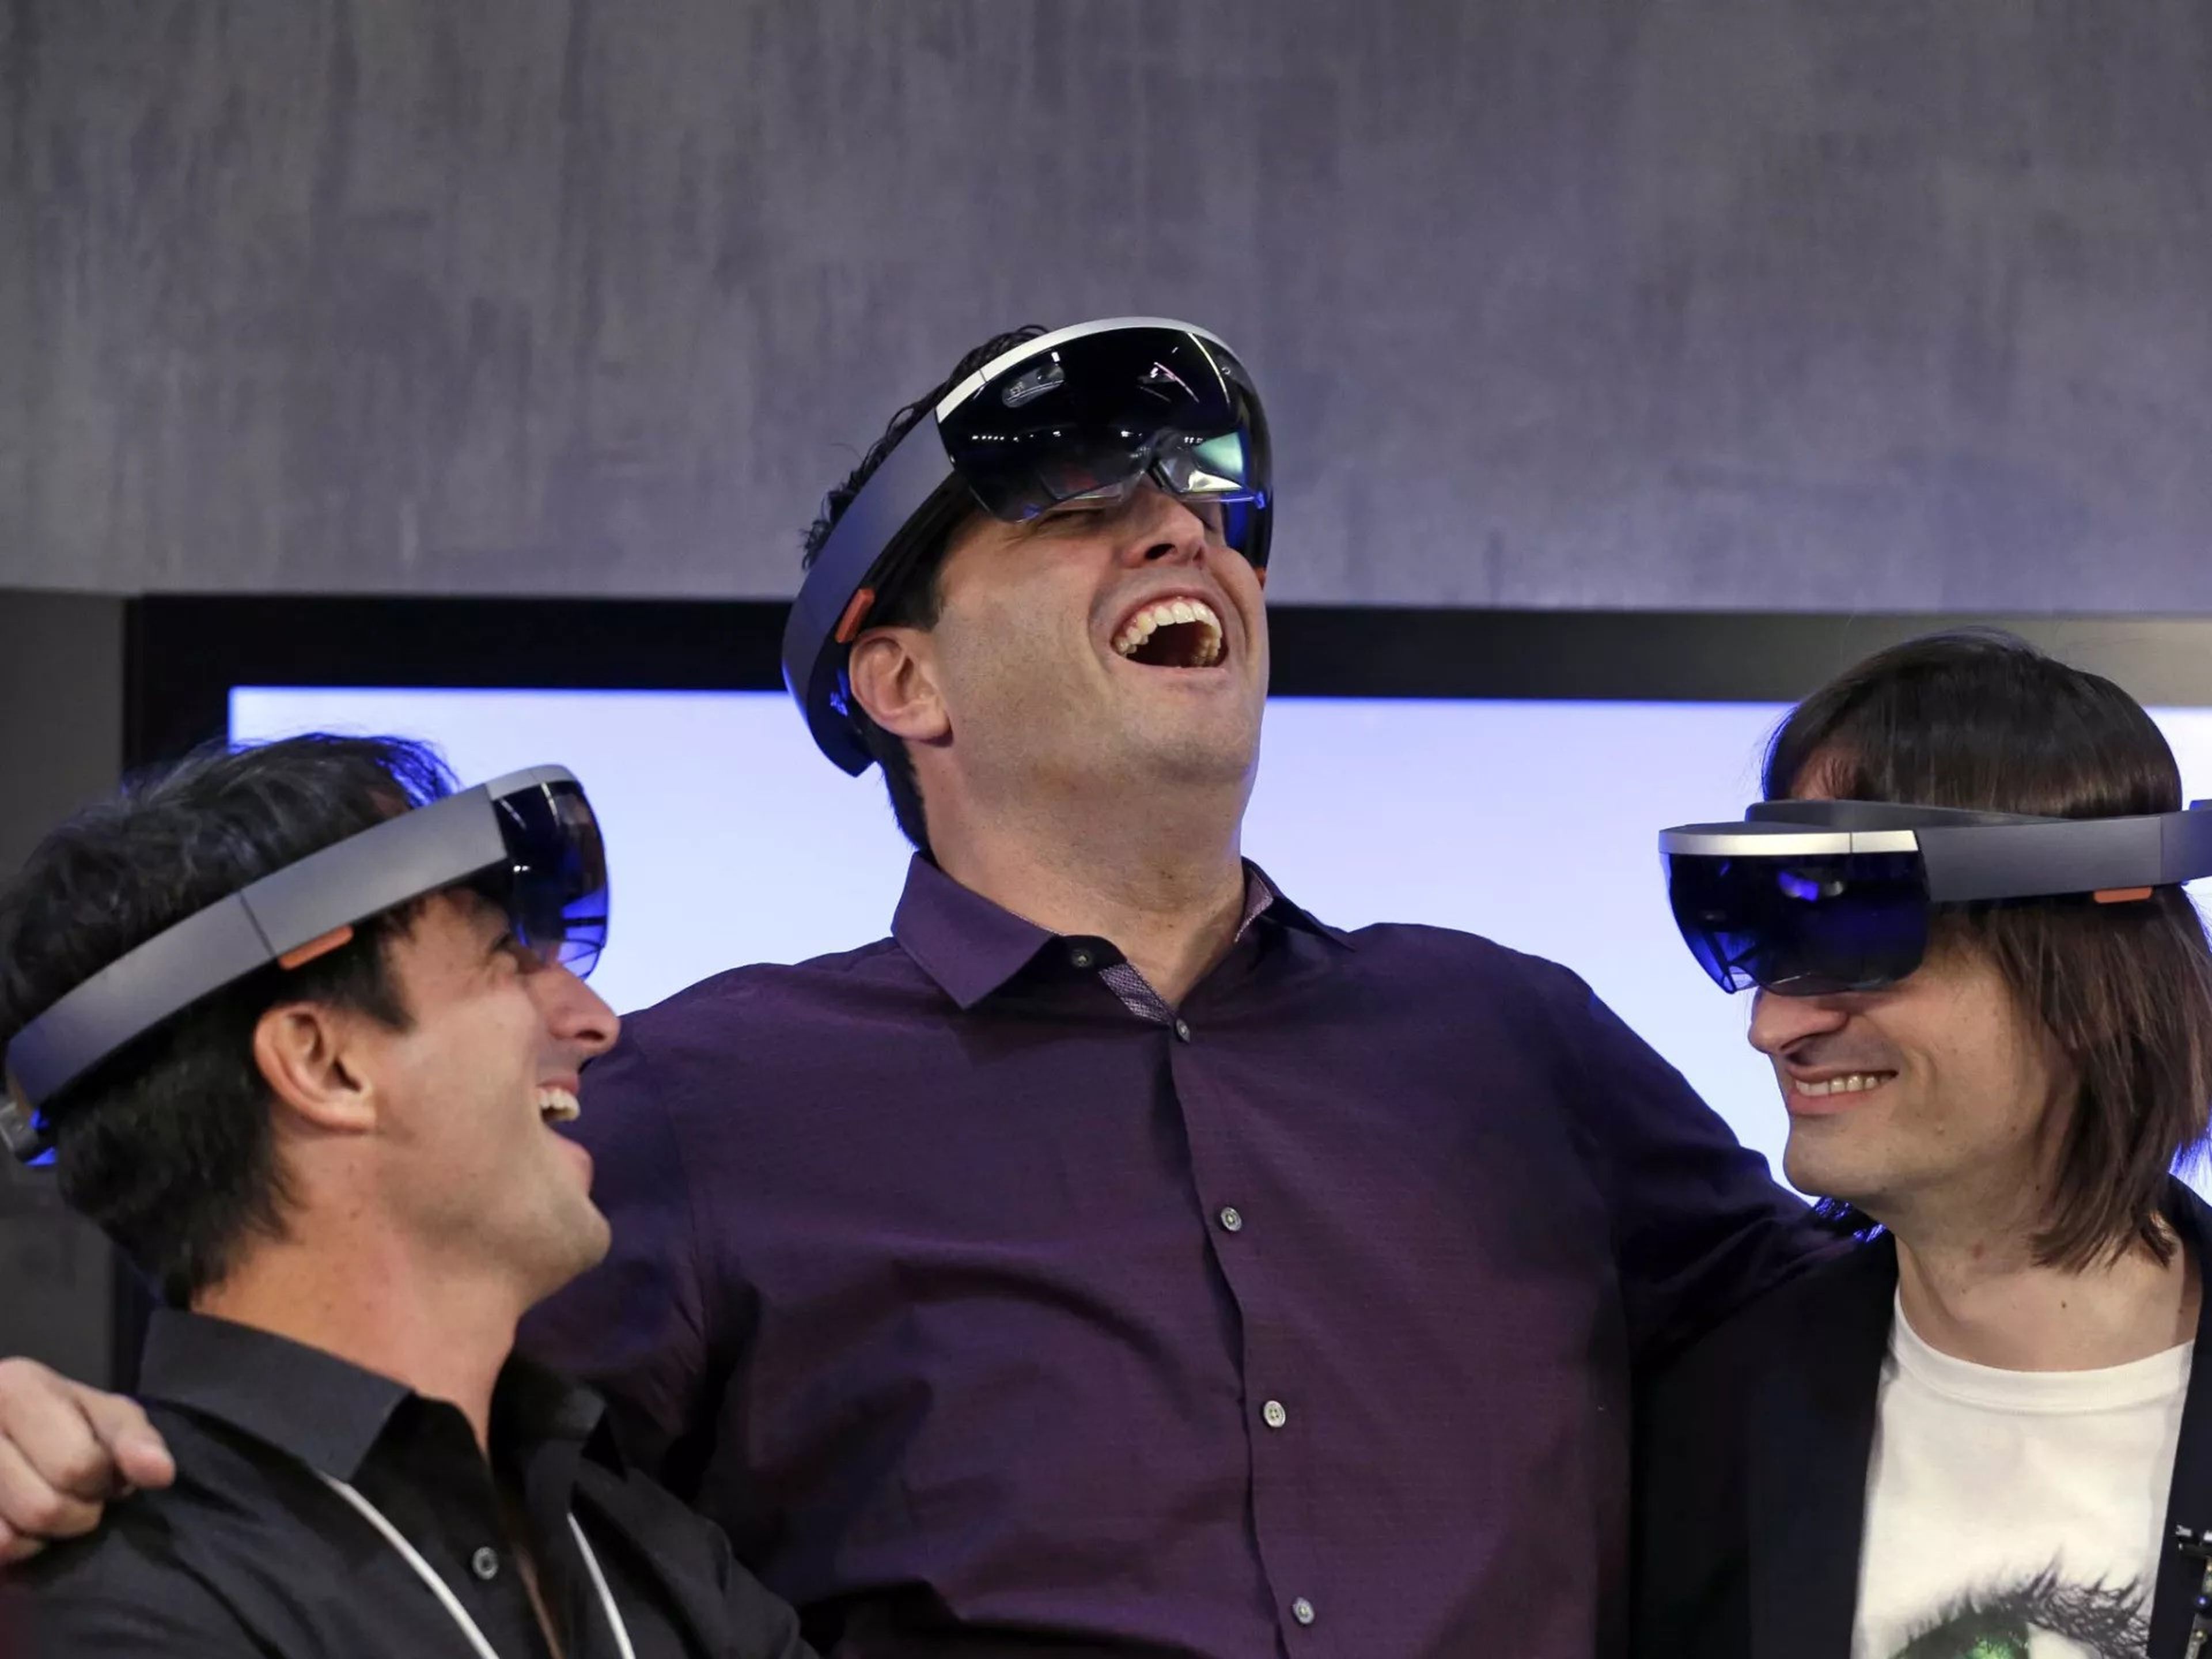 Microsoft Hololens VR